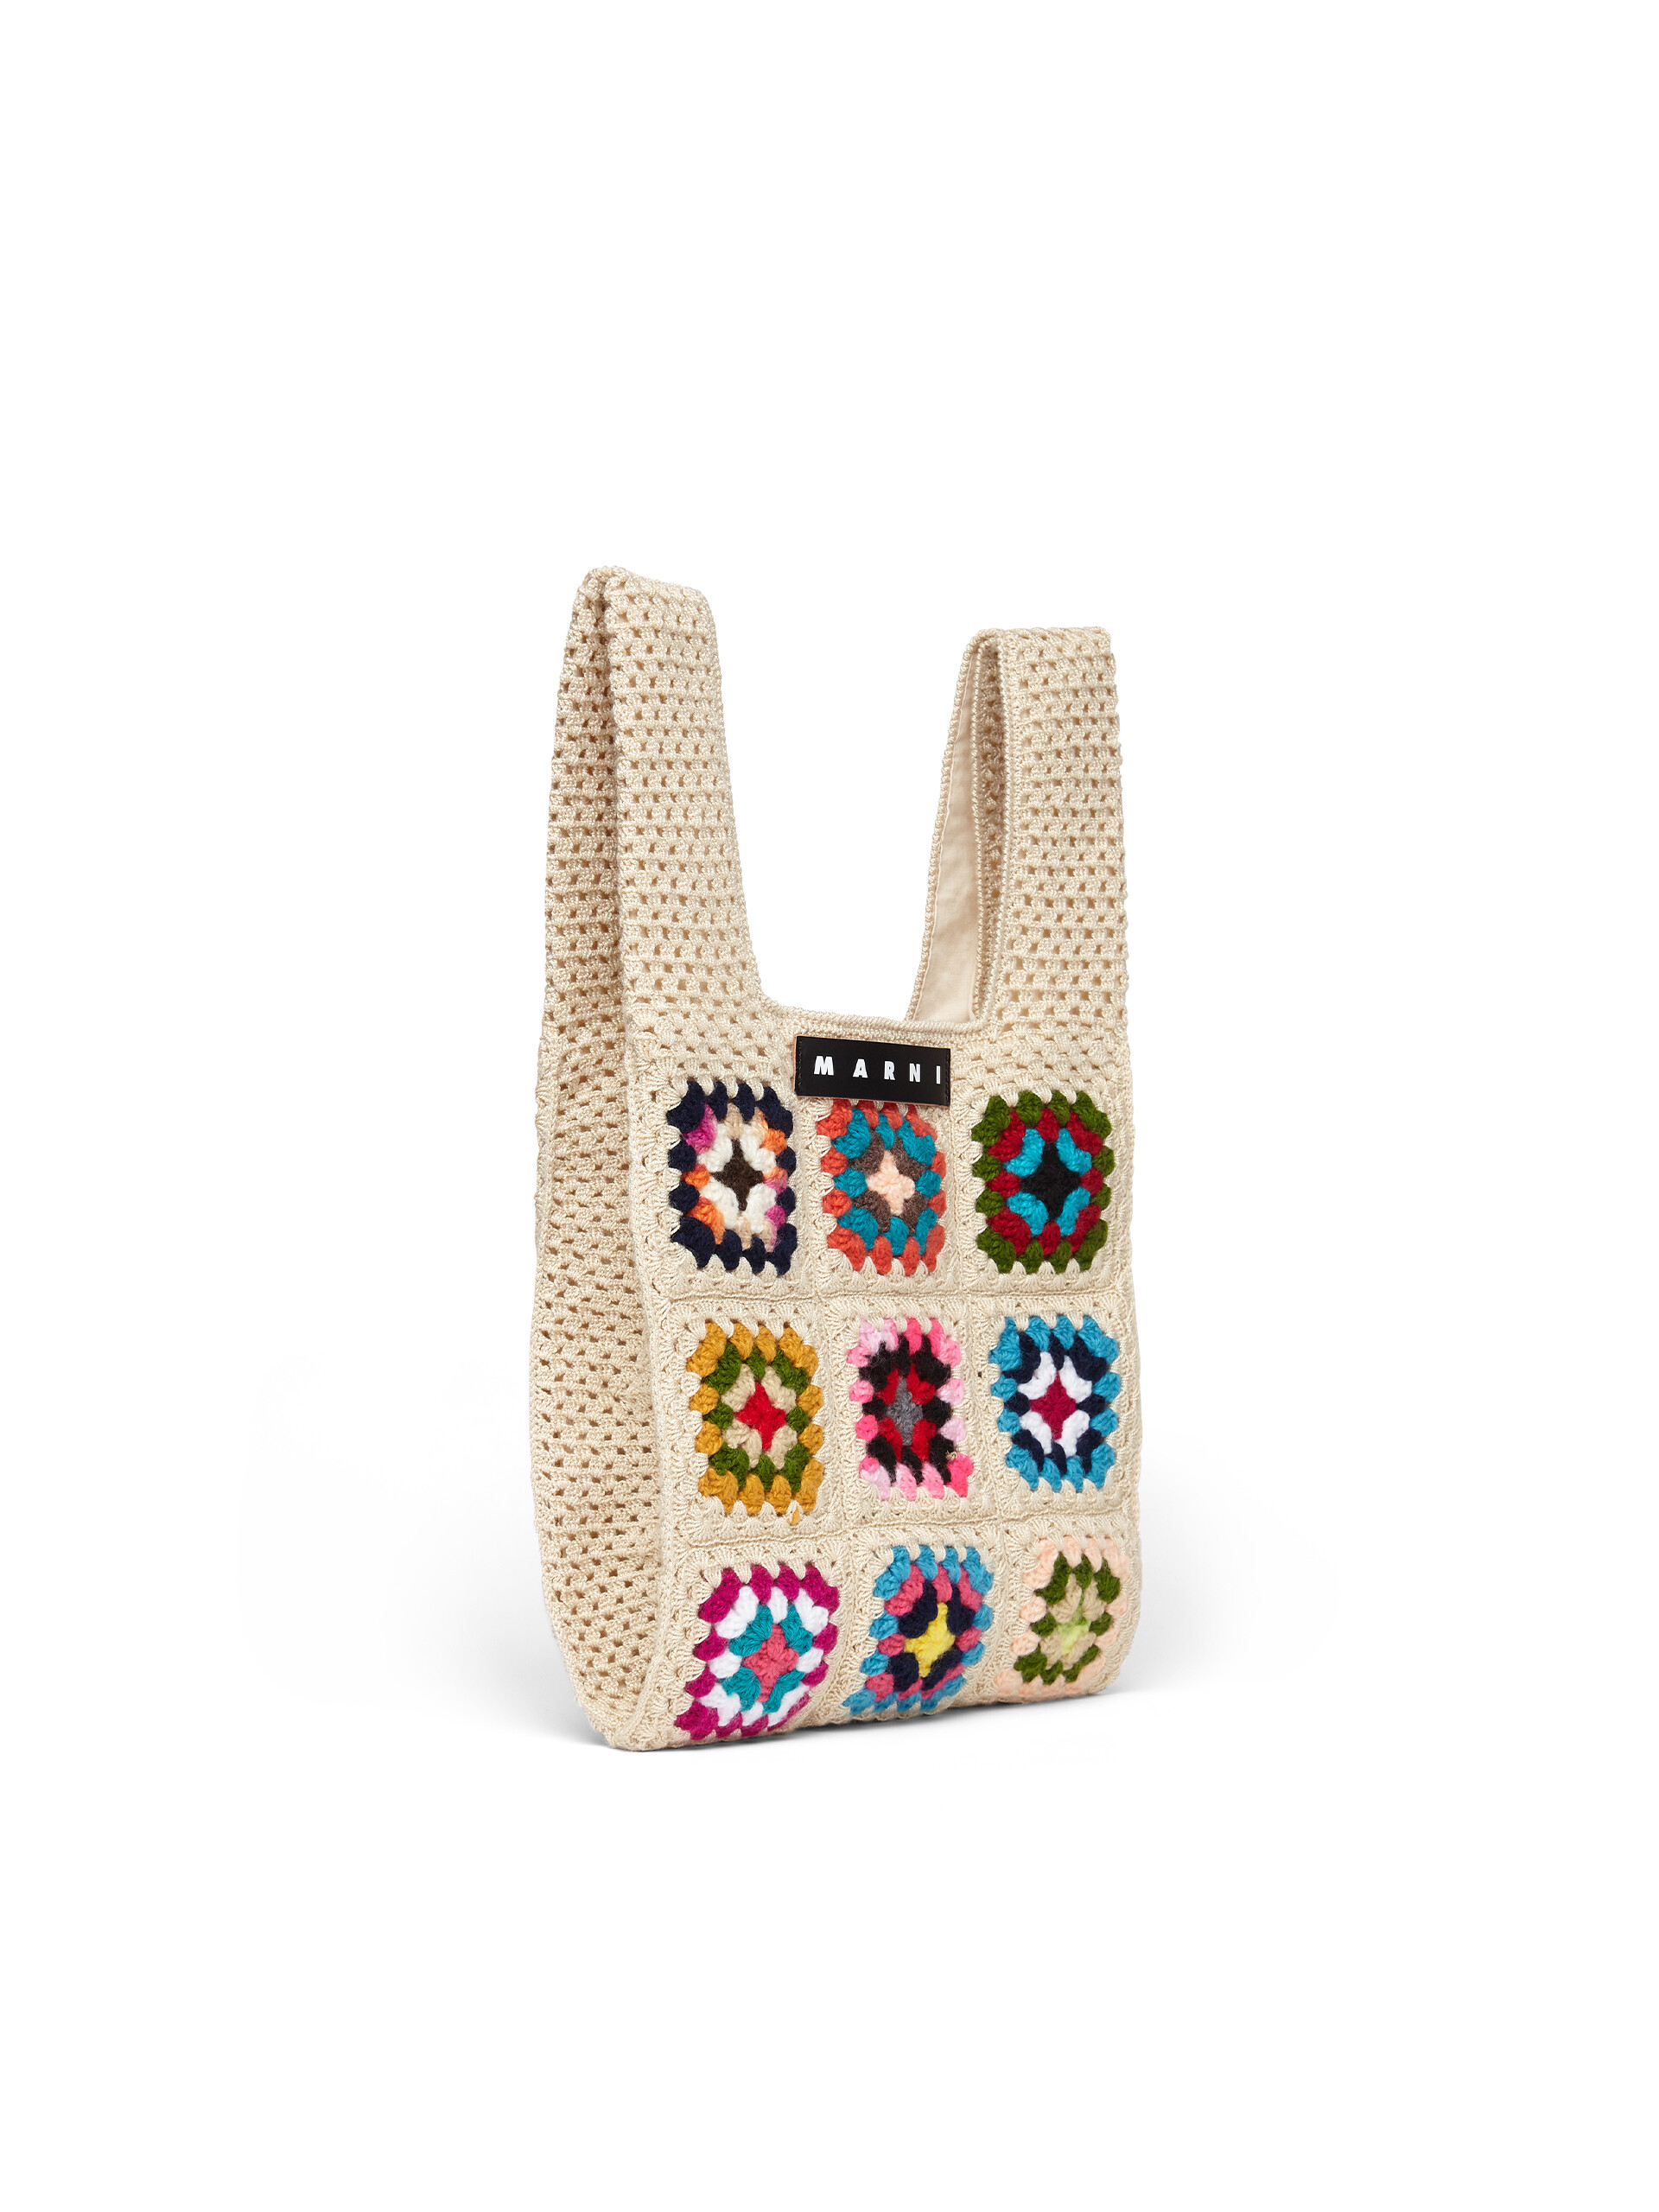 MARNI MARKET FISH bag in white crochet - Bags - Image 2